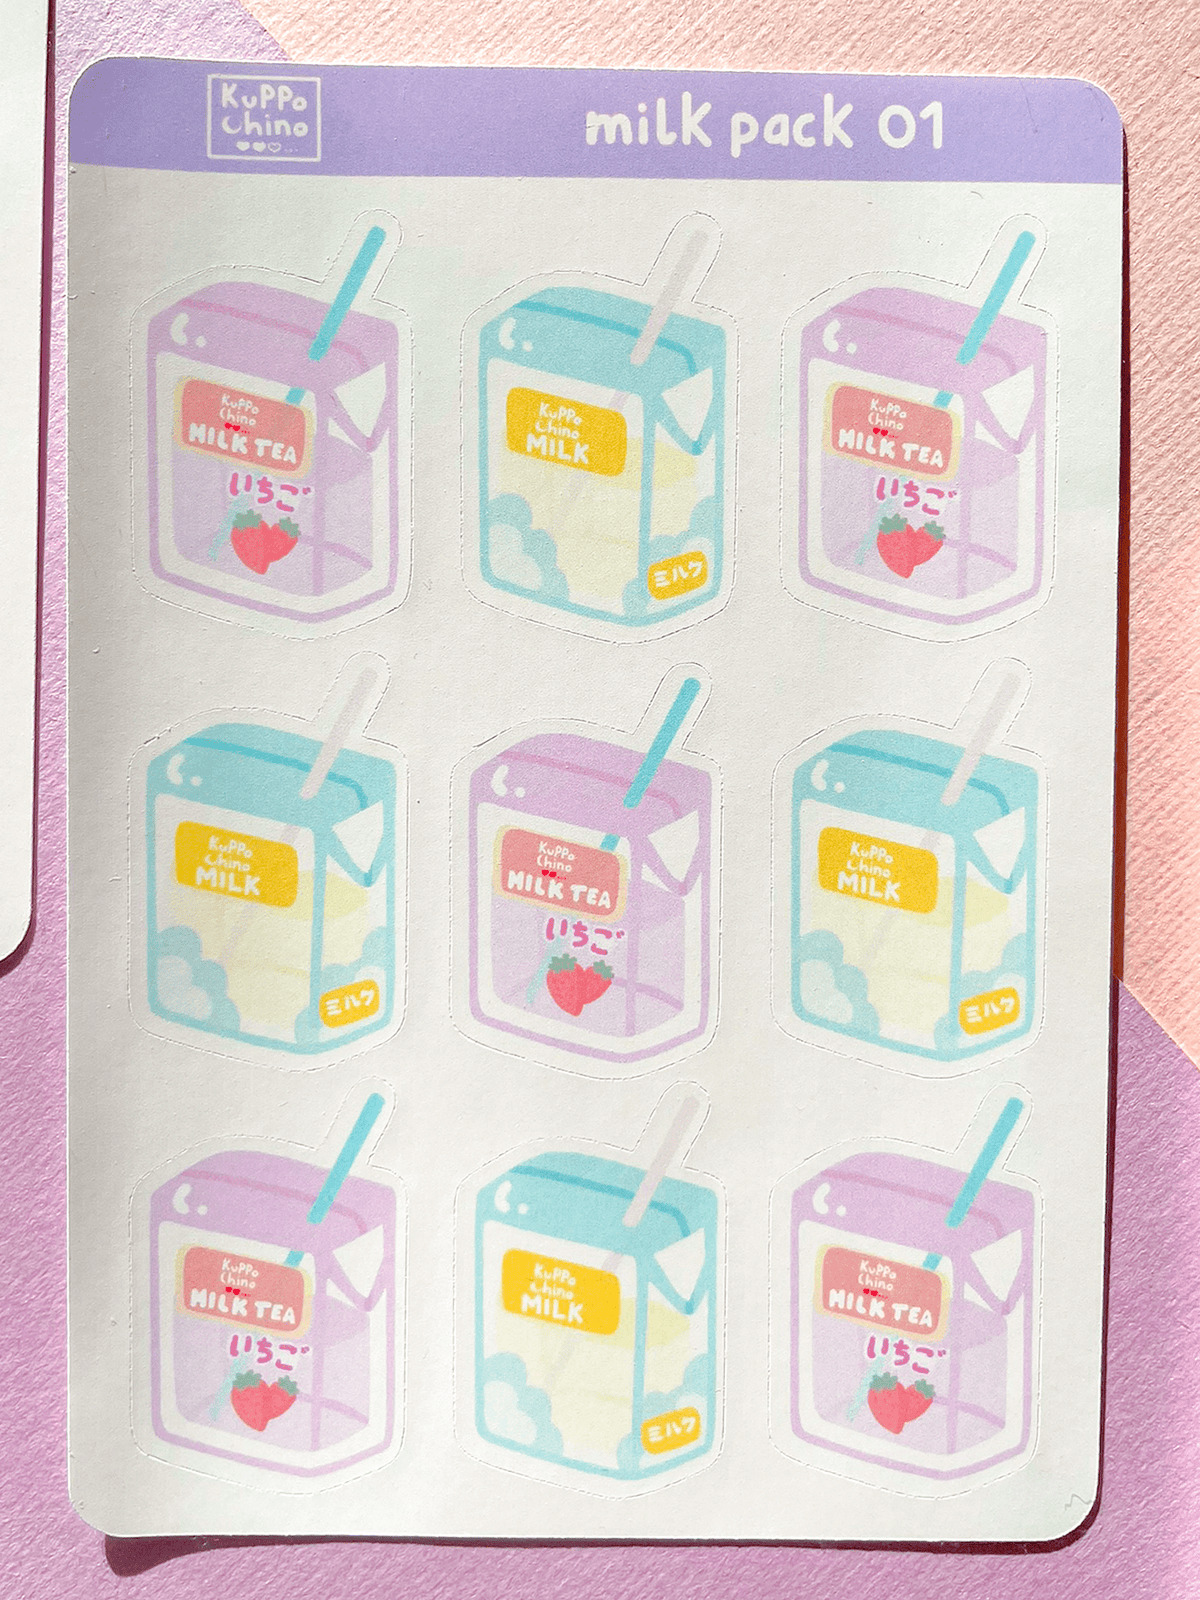 Kuppochino Cafe Milk Pack 01 Sheet